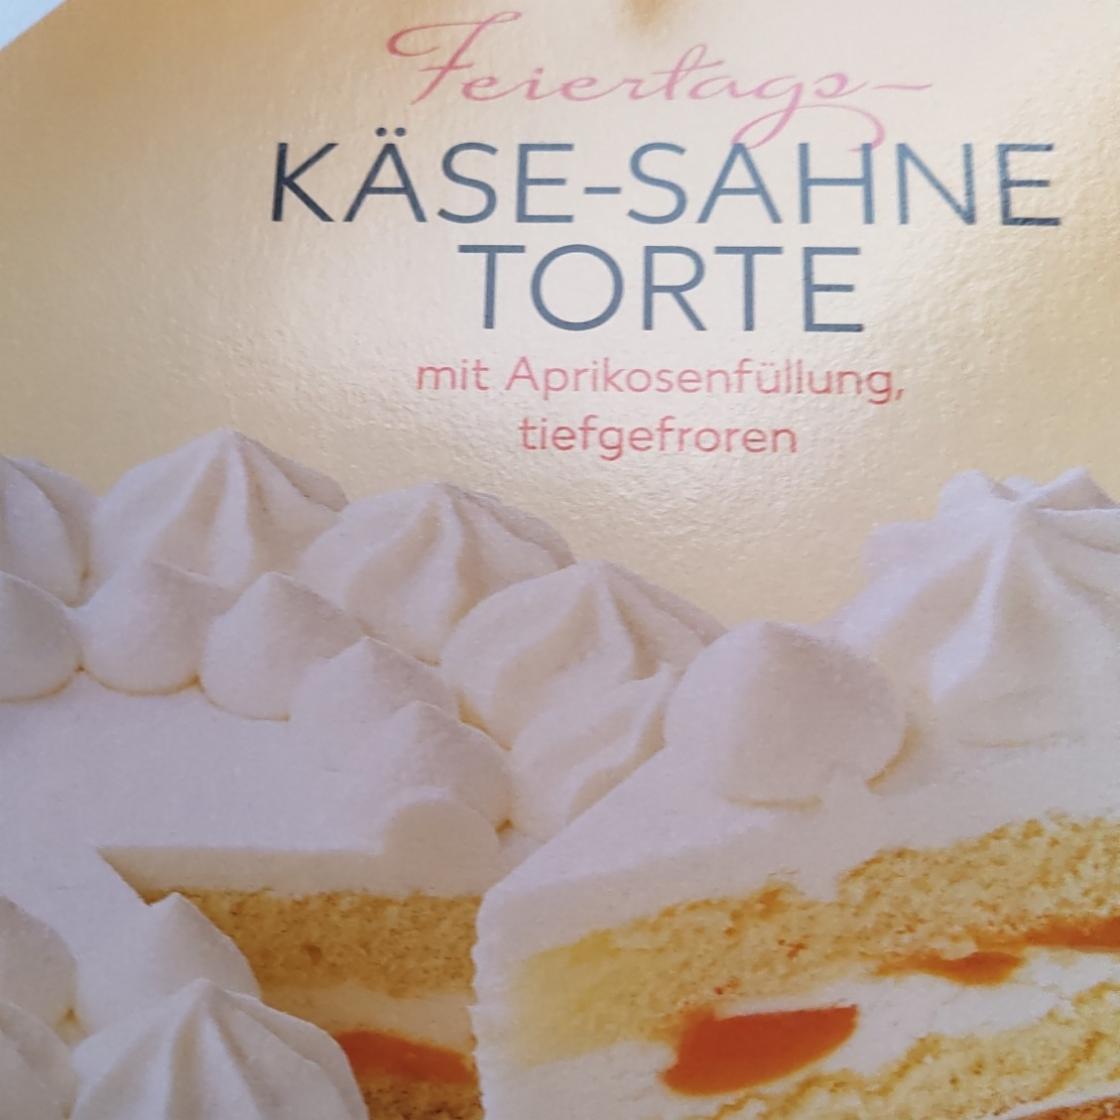 Fotografie - Käse-Sahne torte mit Aprikosenfüllung K-Classic